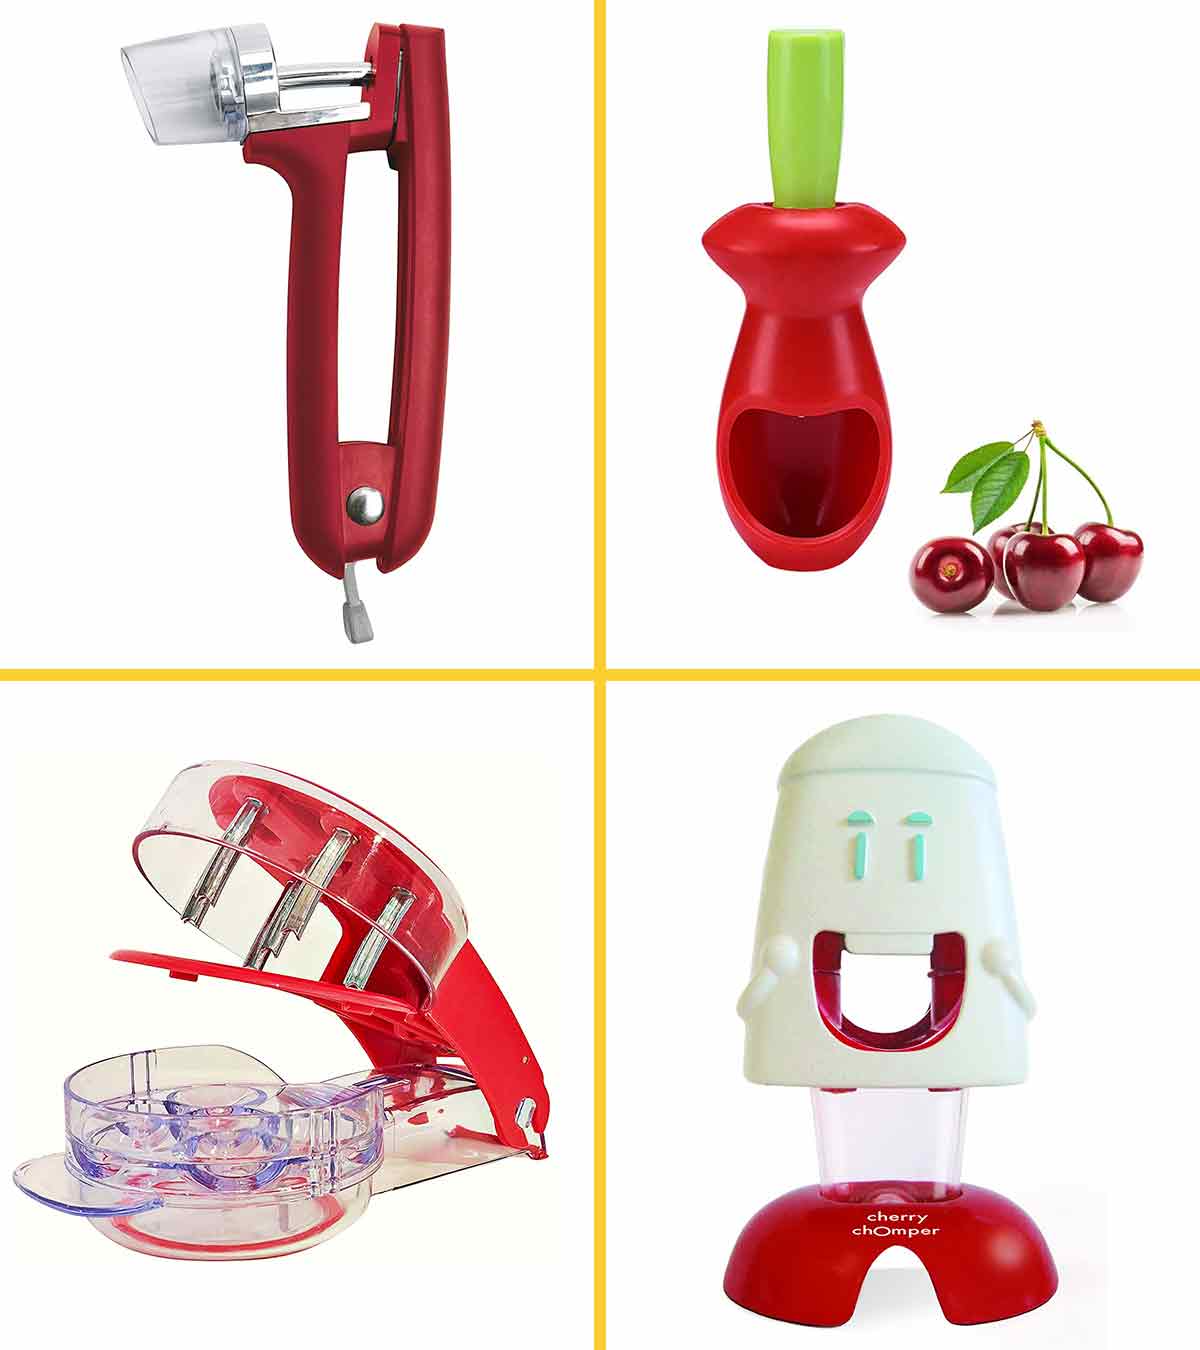 SUNFEID Kitchen Gadget Cherry Pitter Tool Heavy Duty Remover Corer Cherry Tool Safe Green 